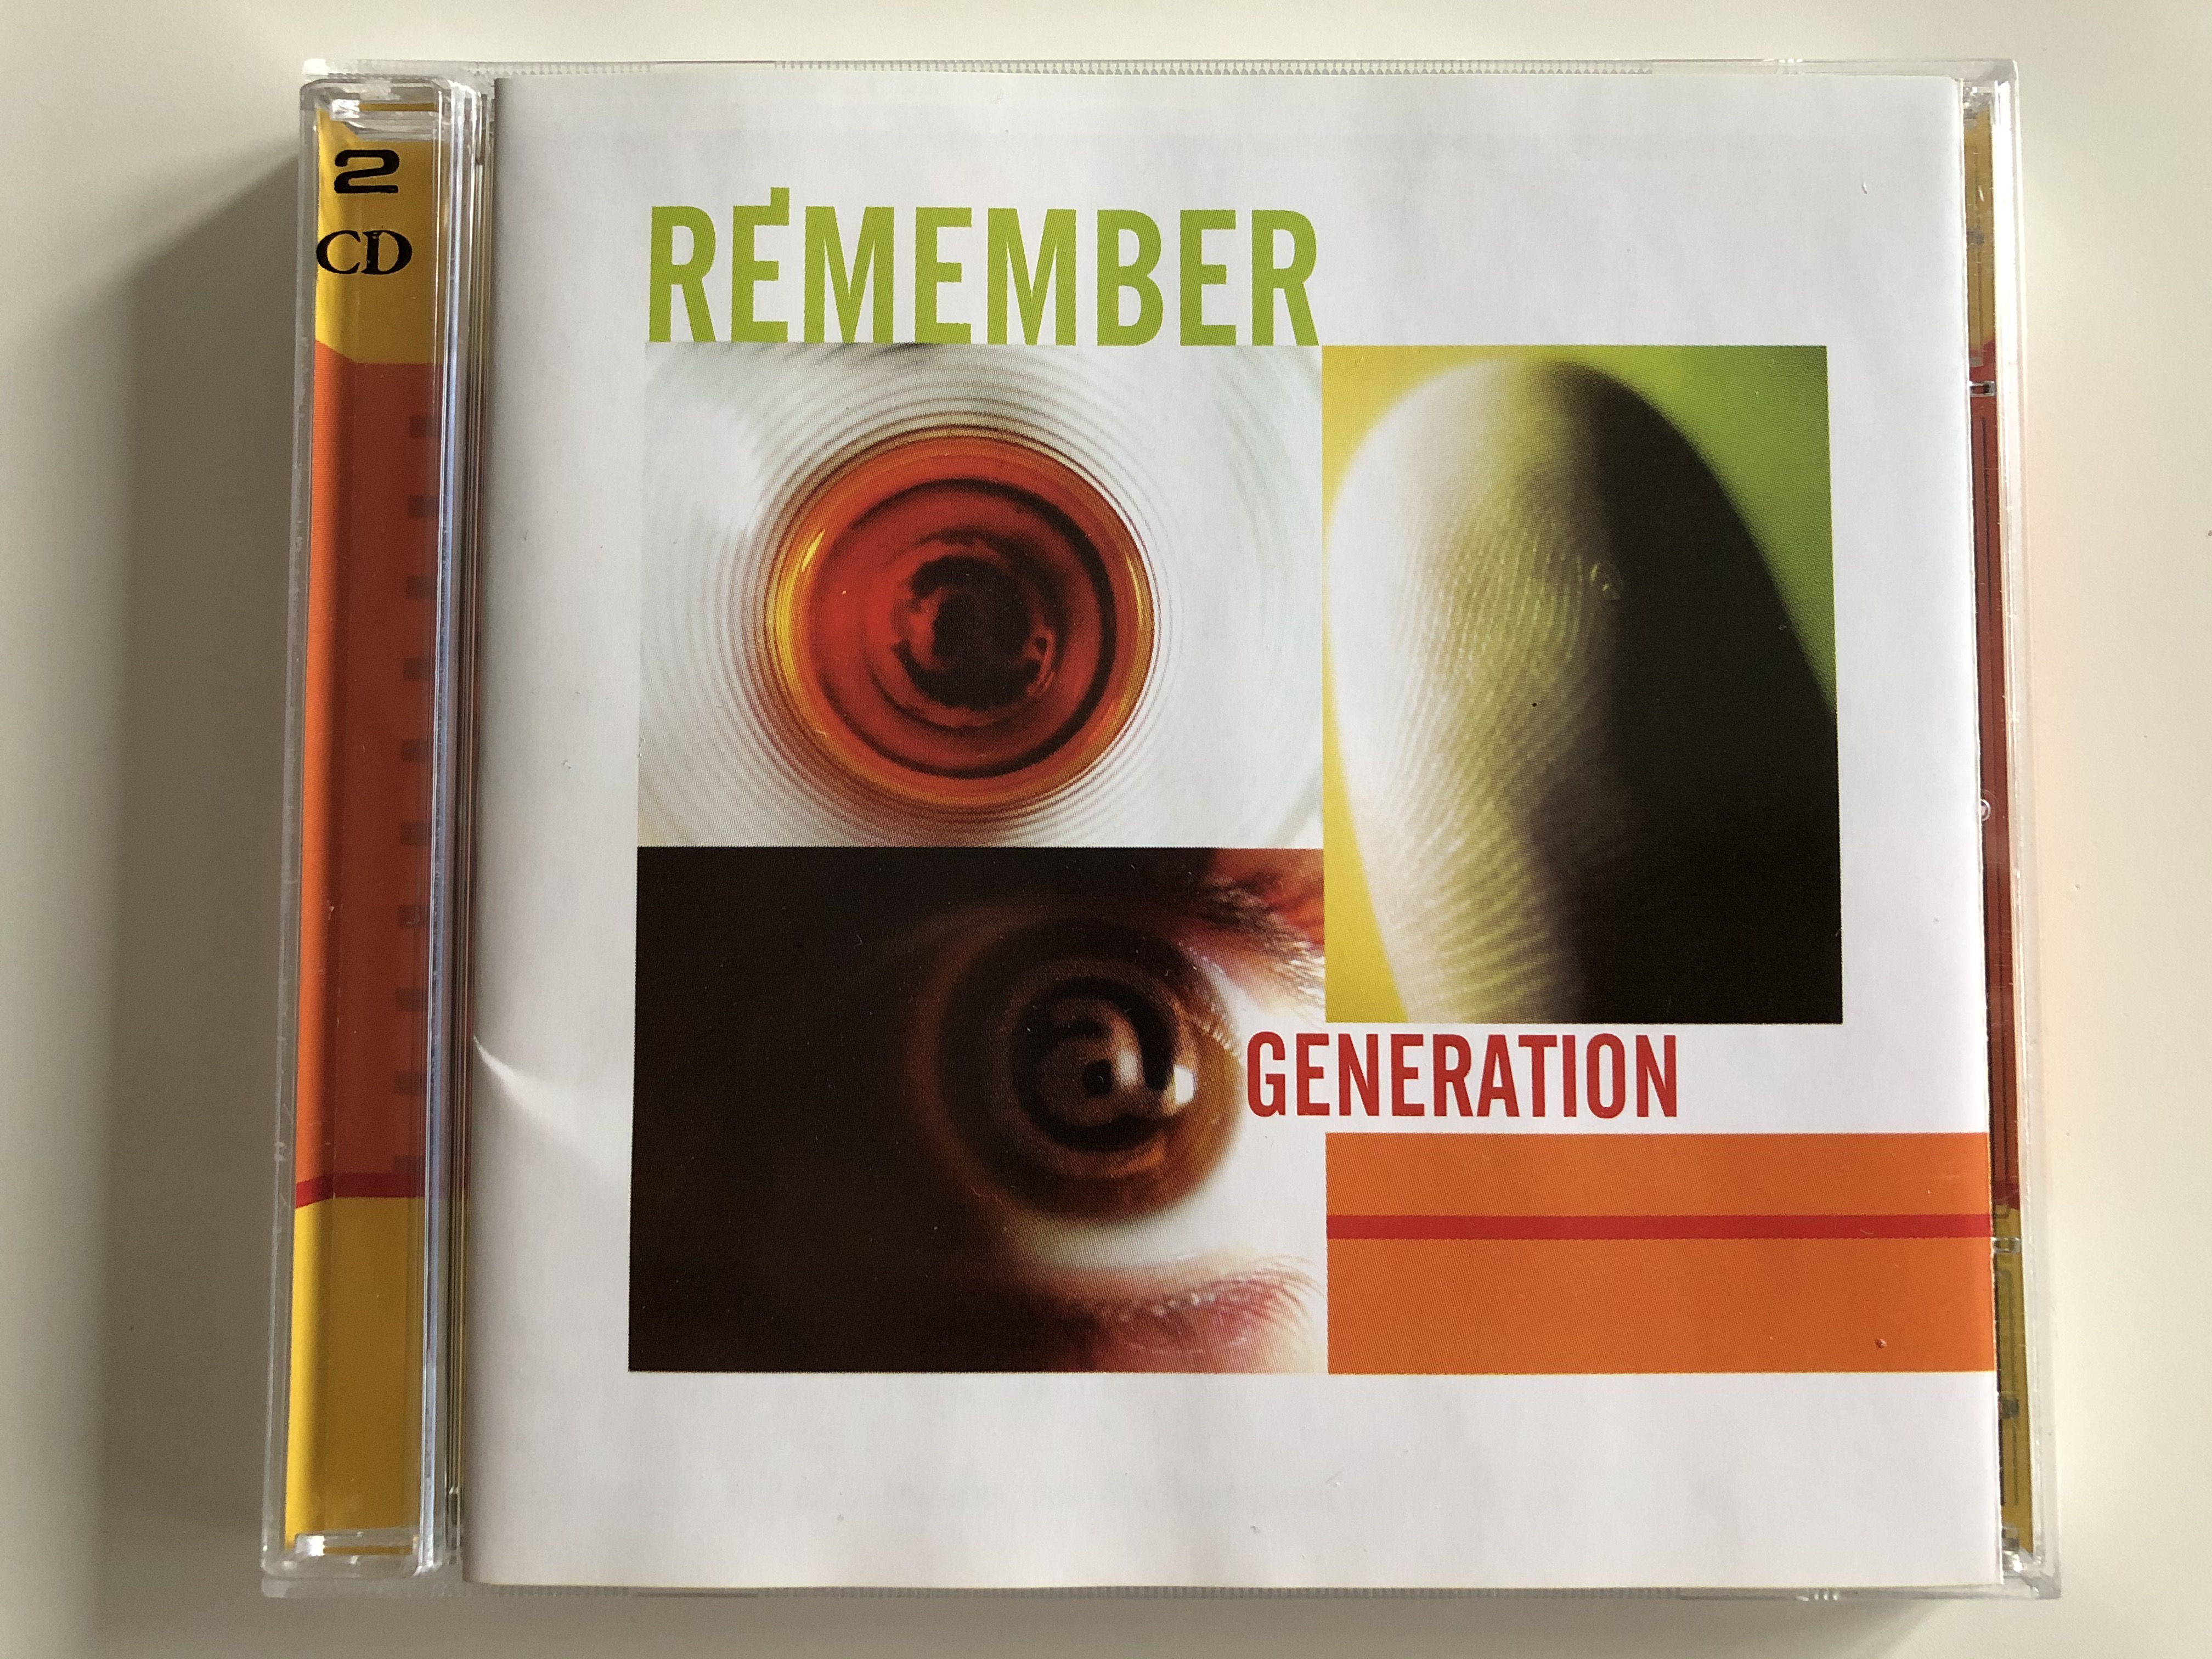 r-member-generation-friss-2x-audio-cd-2001-fri-020101-1-1-.jpg